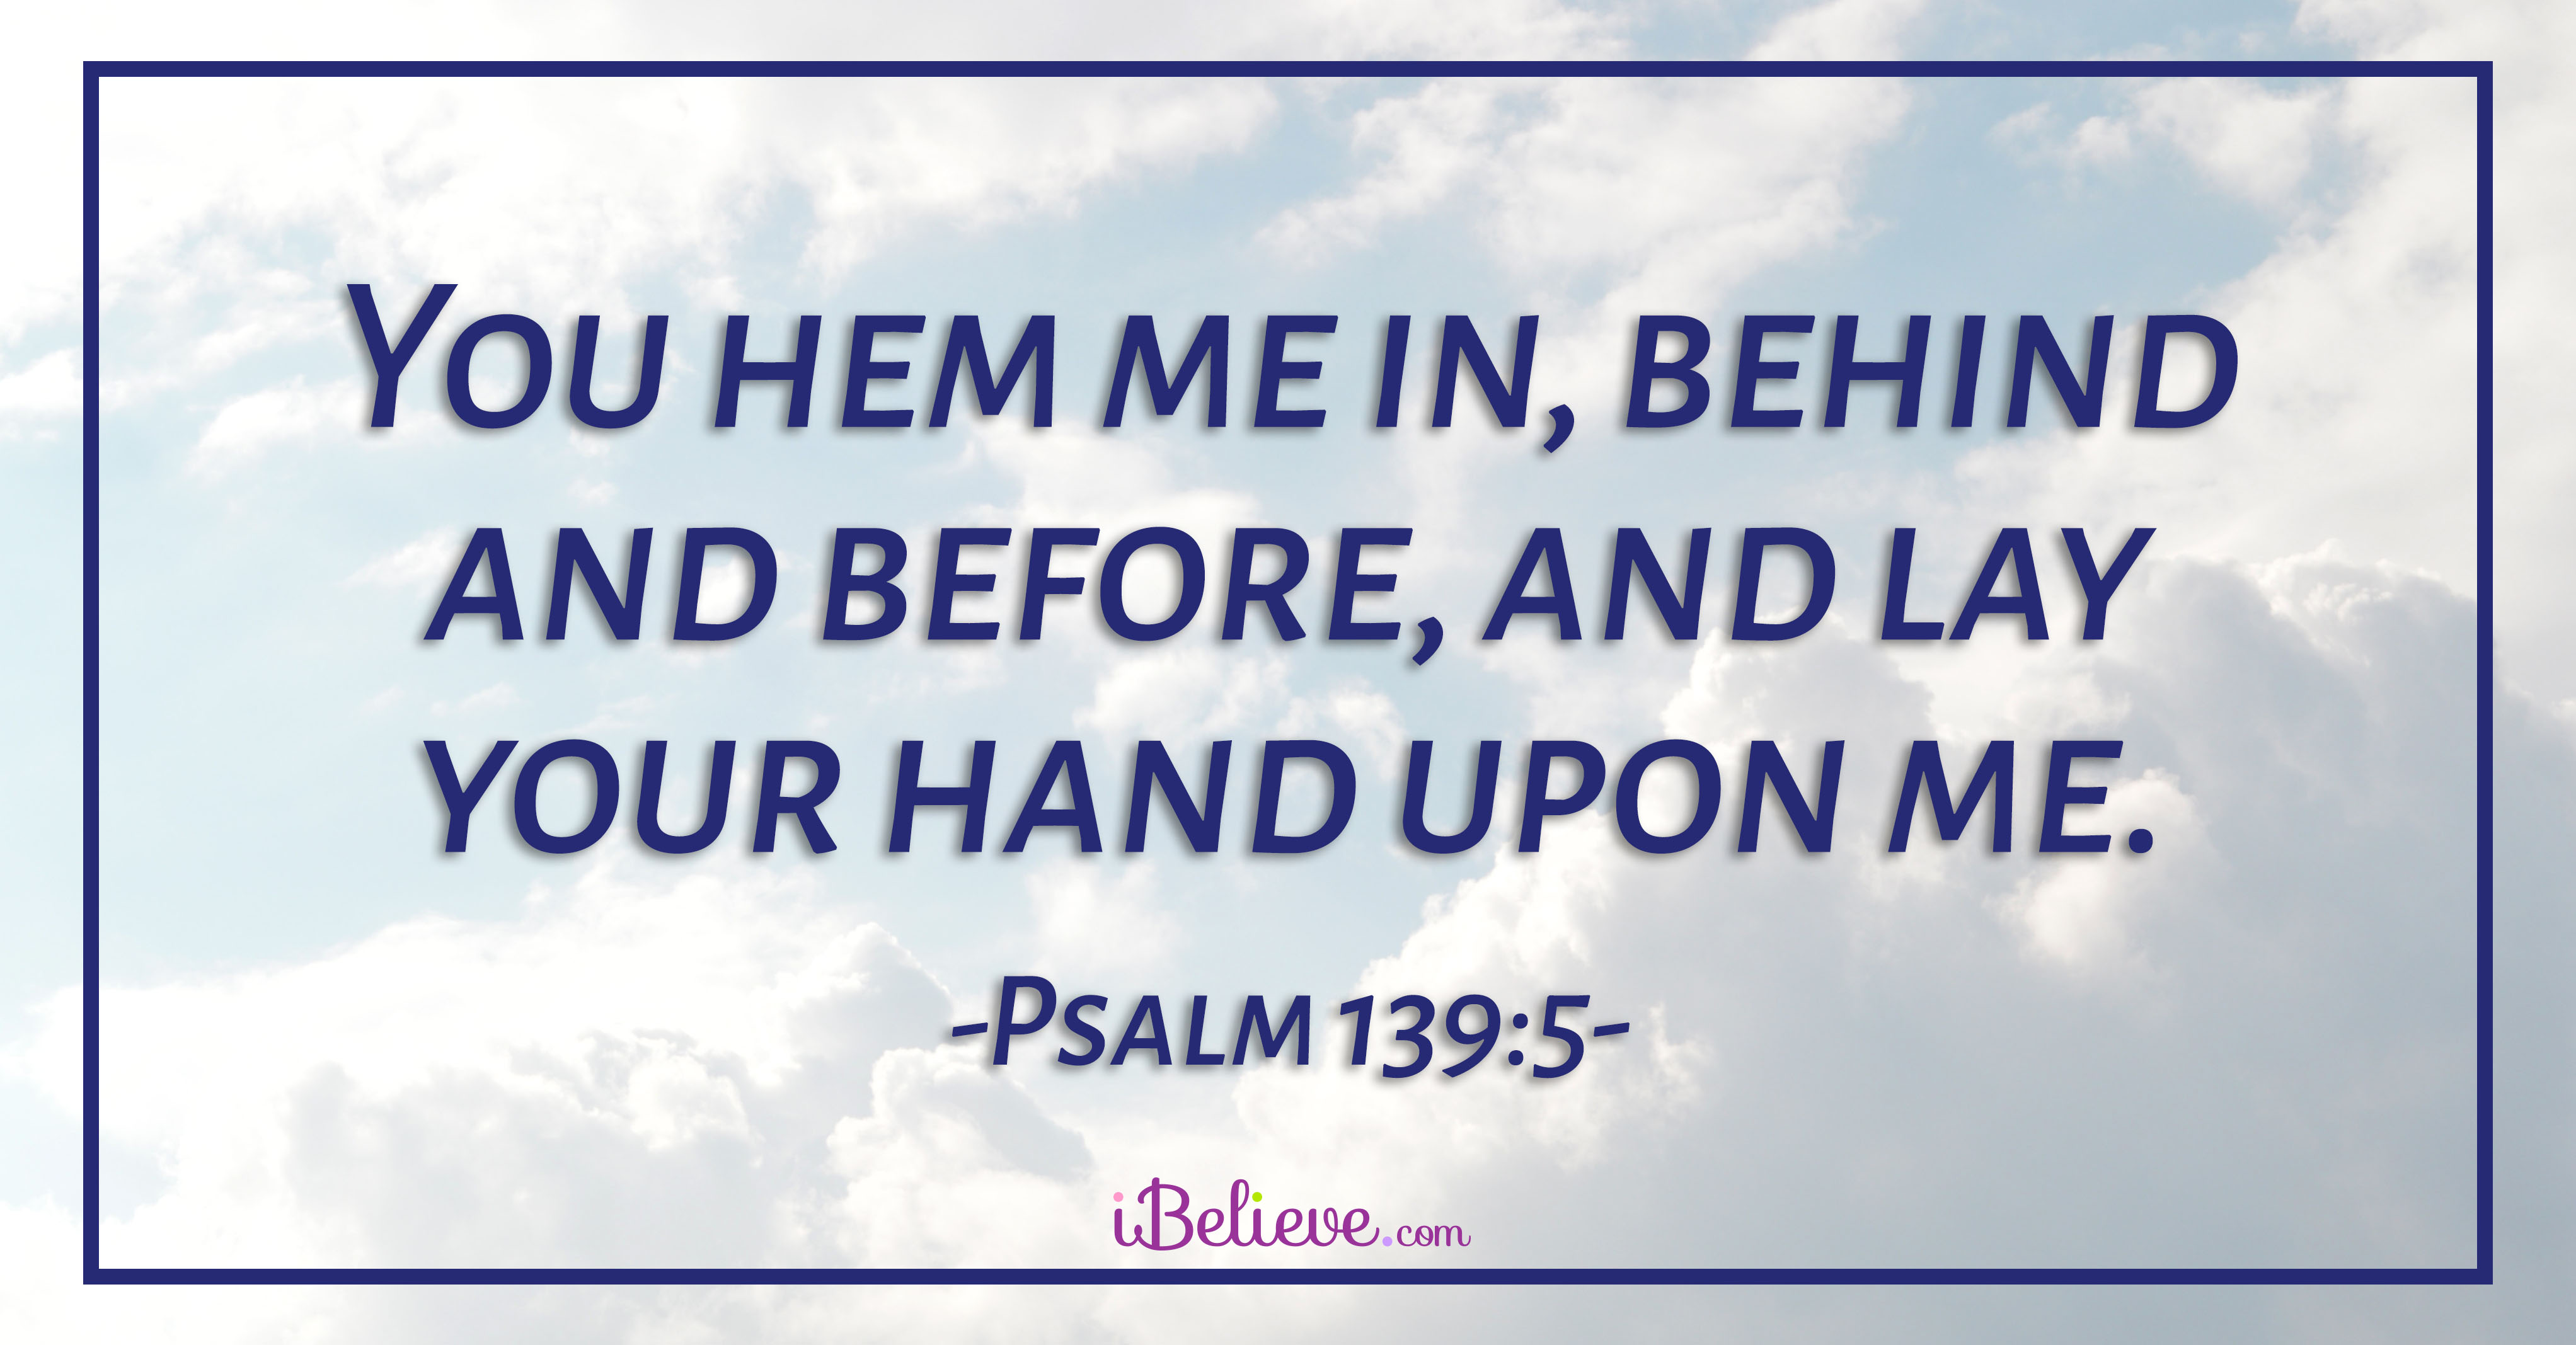 Psalm 139:5